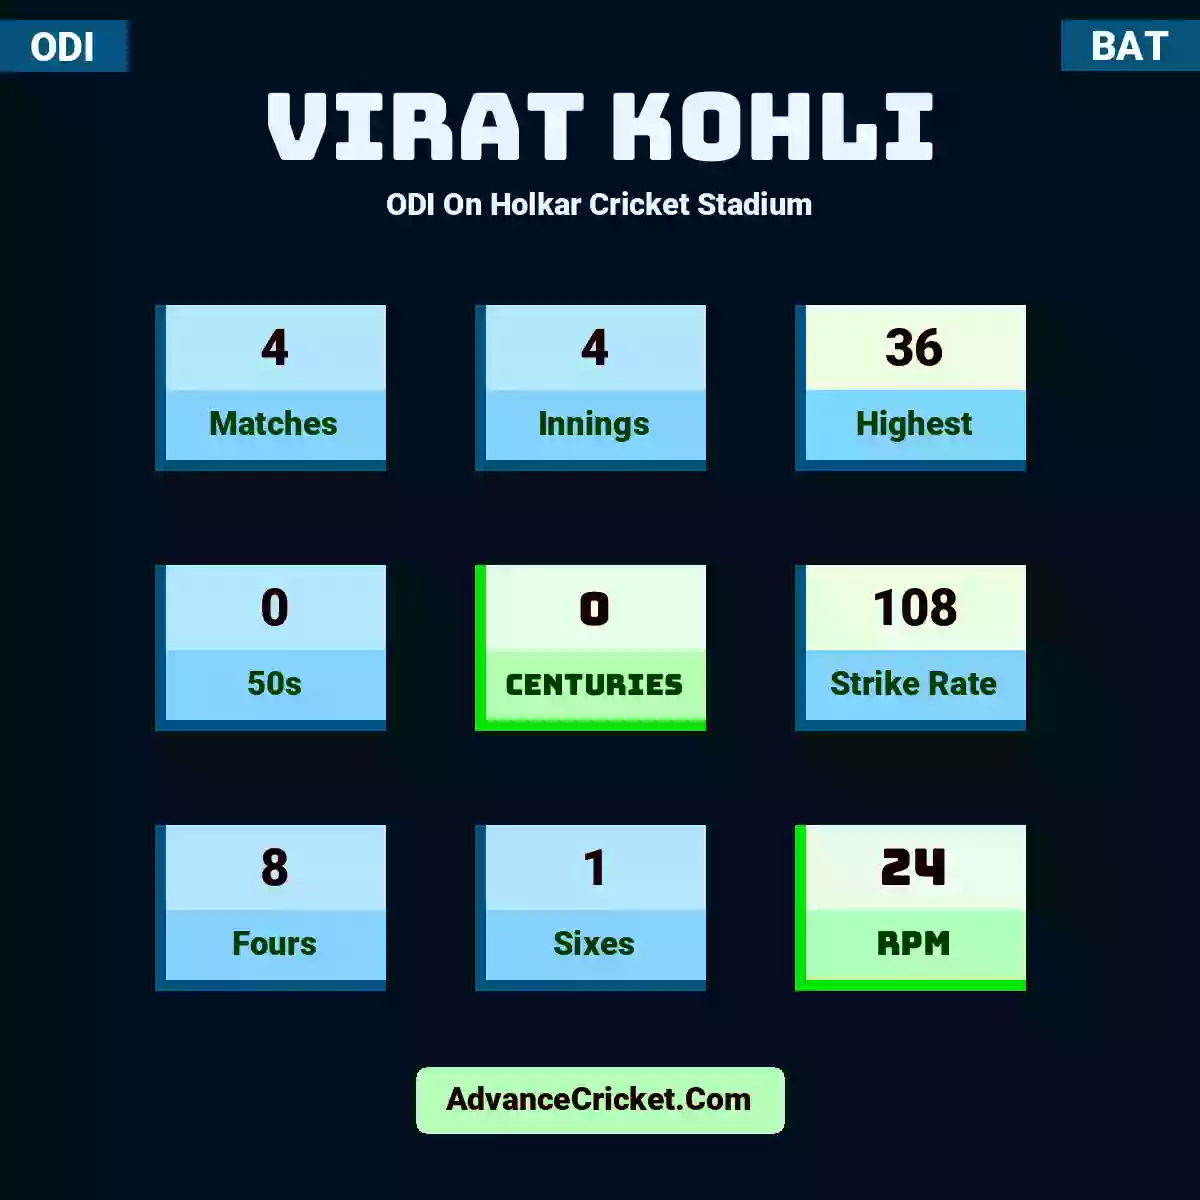 Virat Kohli ODI  On Holkar Cricket Stadium, Virat Kohli played 4 matches, scored 36 runs as highest, 0 half-centuries, and 0 centuries, with a strike rate of 108. V.Kohli hit 8 fours and 1 sixes, with an RPM of 24.